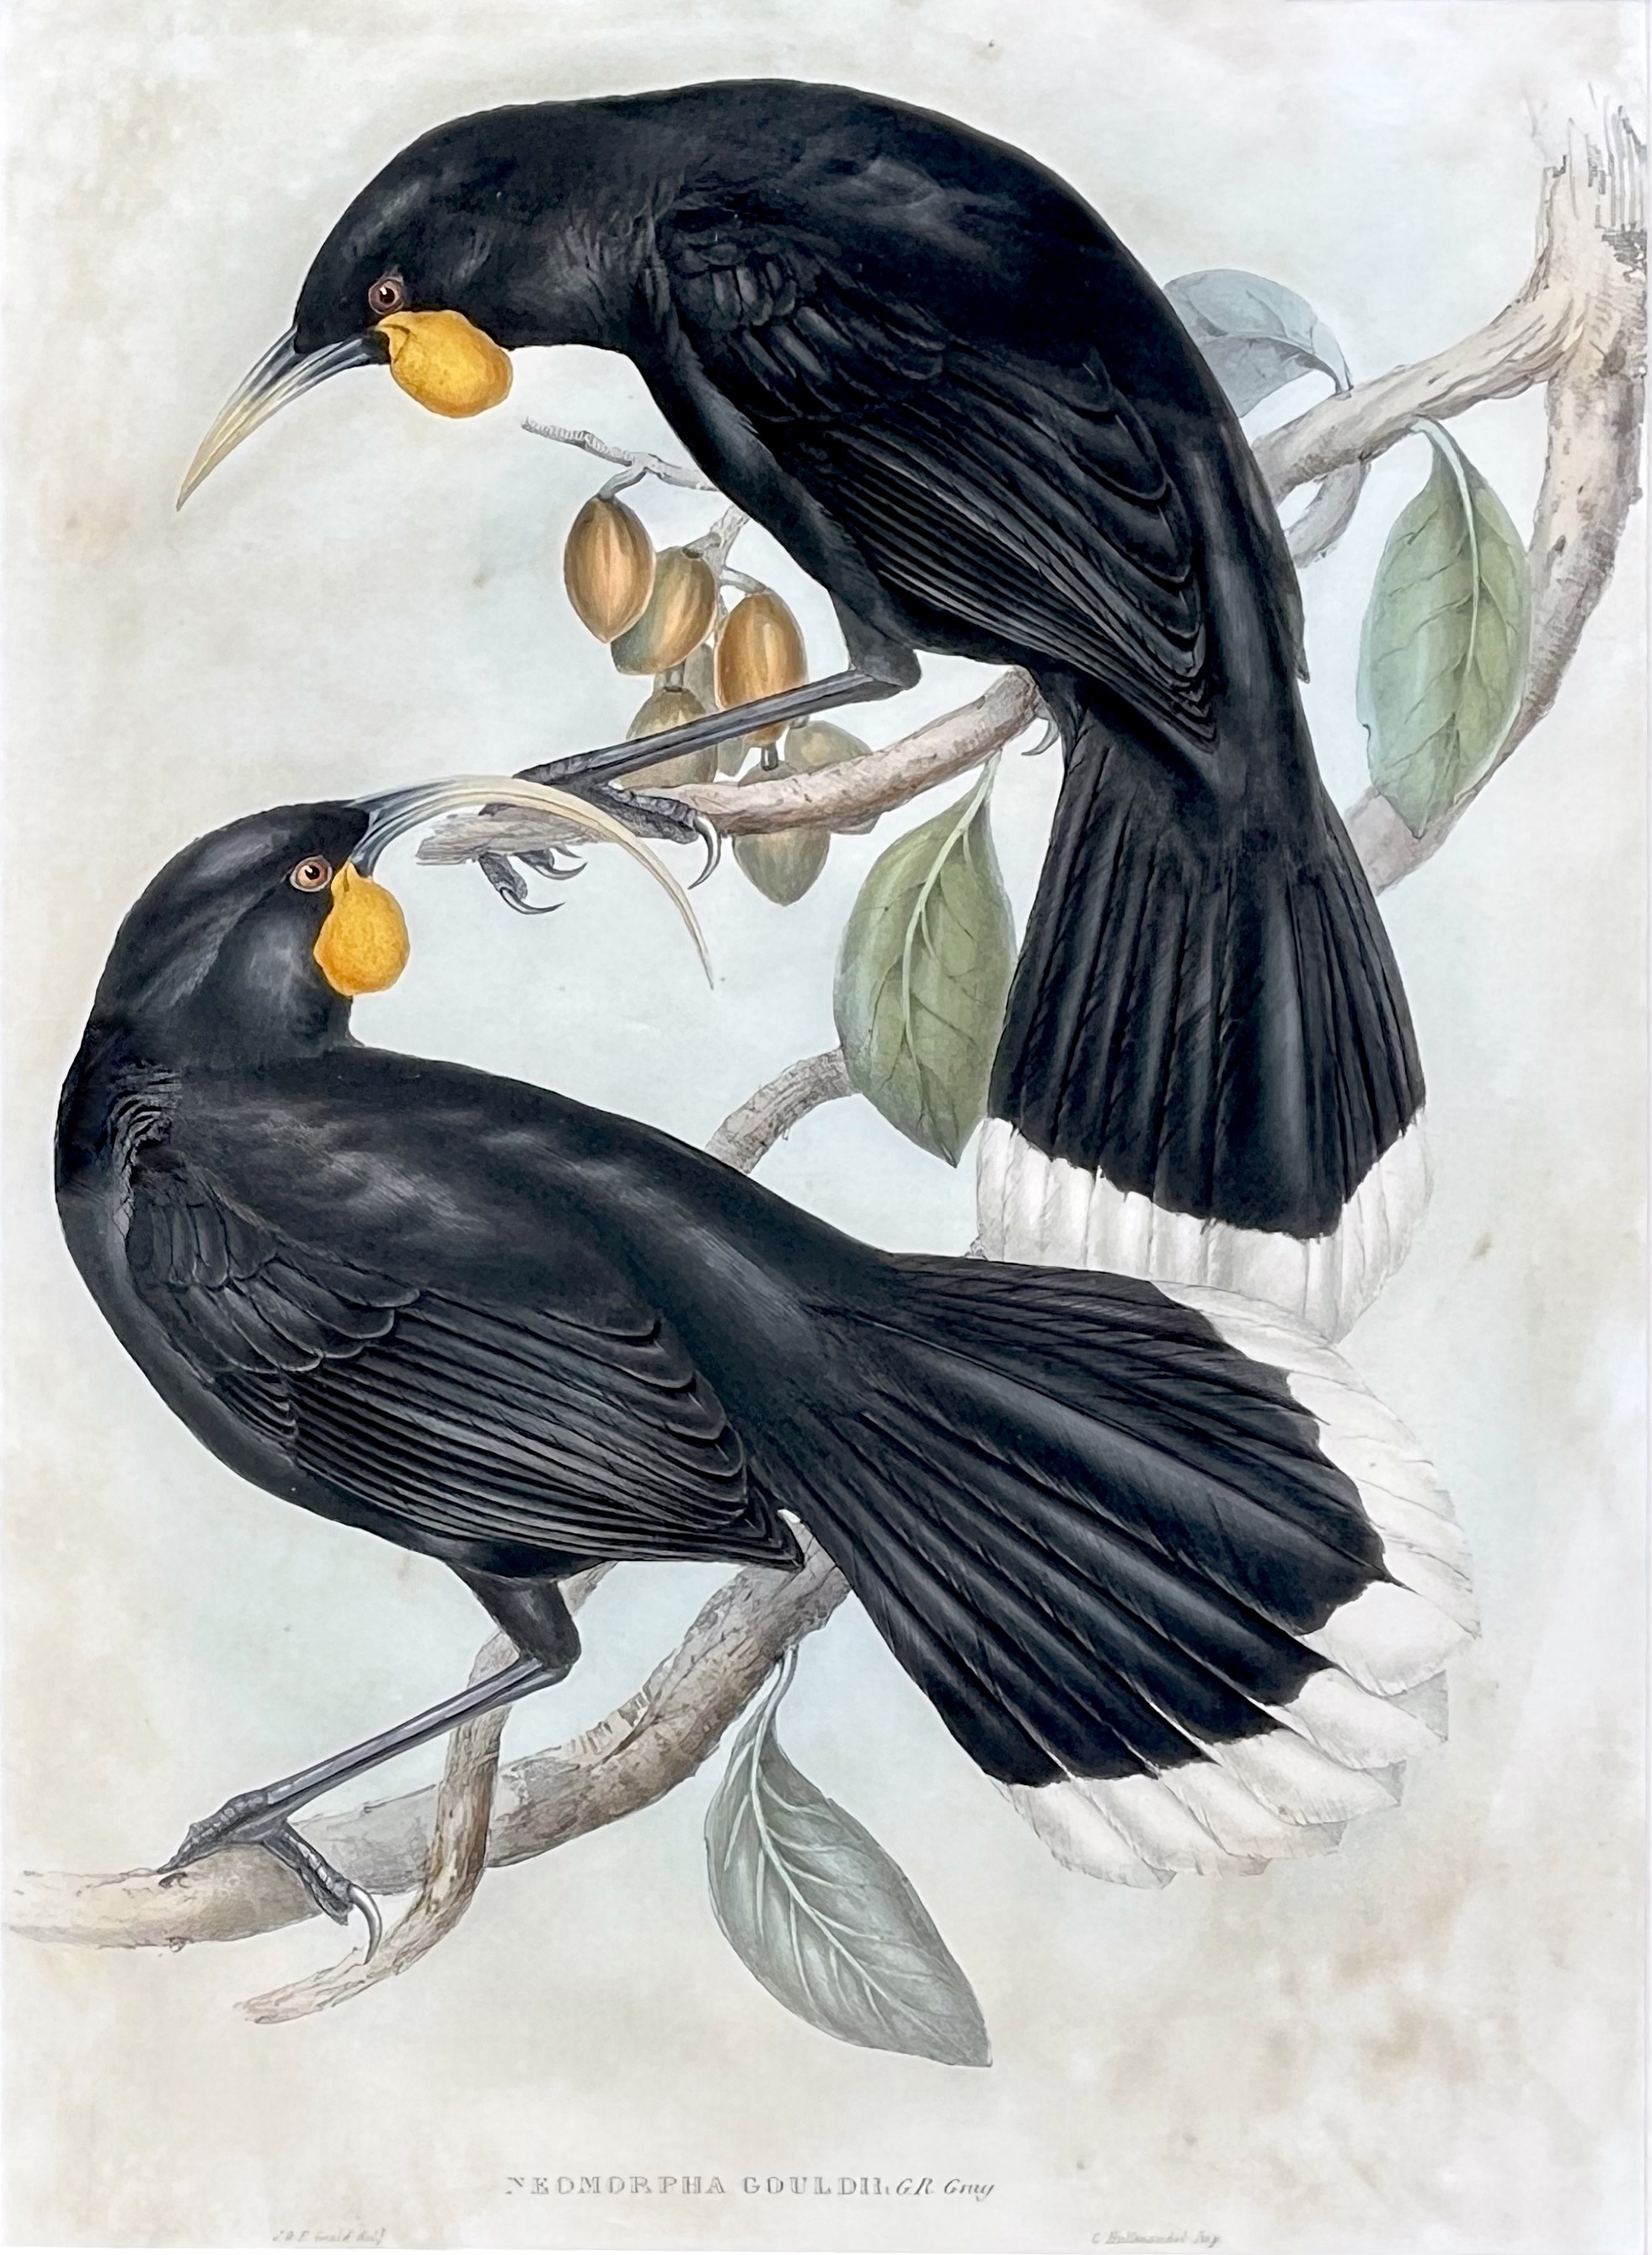 Neomorpha Gouldii (The Huia), London, Gould by John Gould, 1848